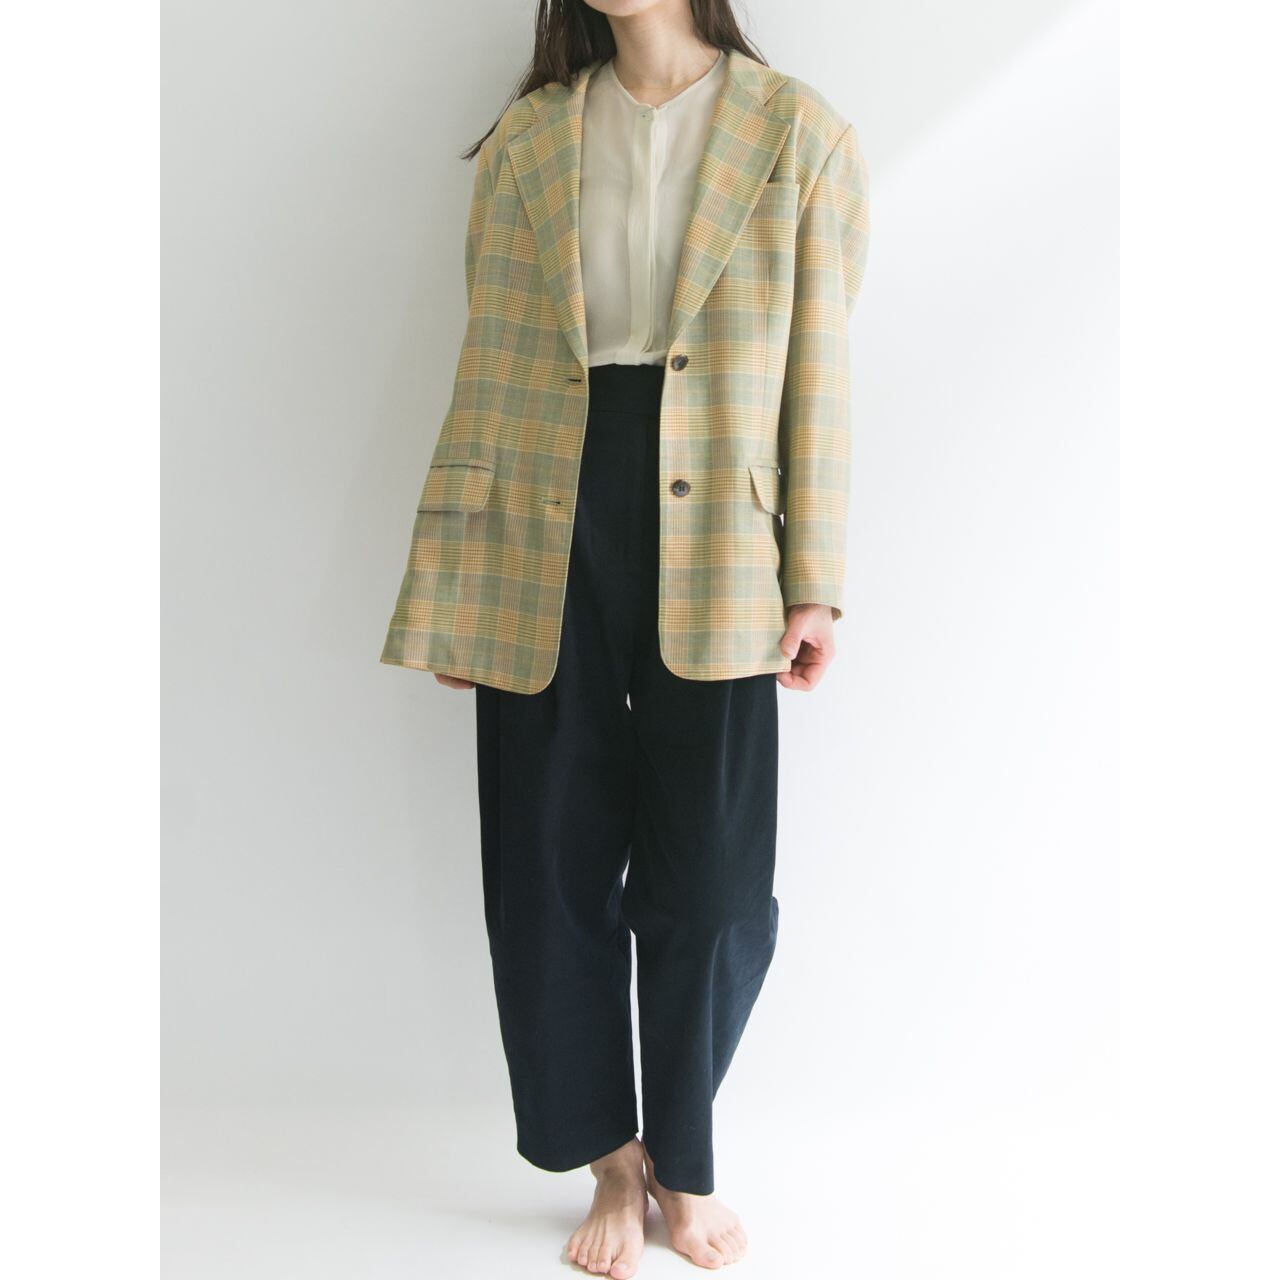 Christian Dior SPORTS】Wool-silk check pattern tailored jacket